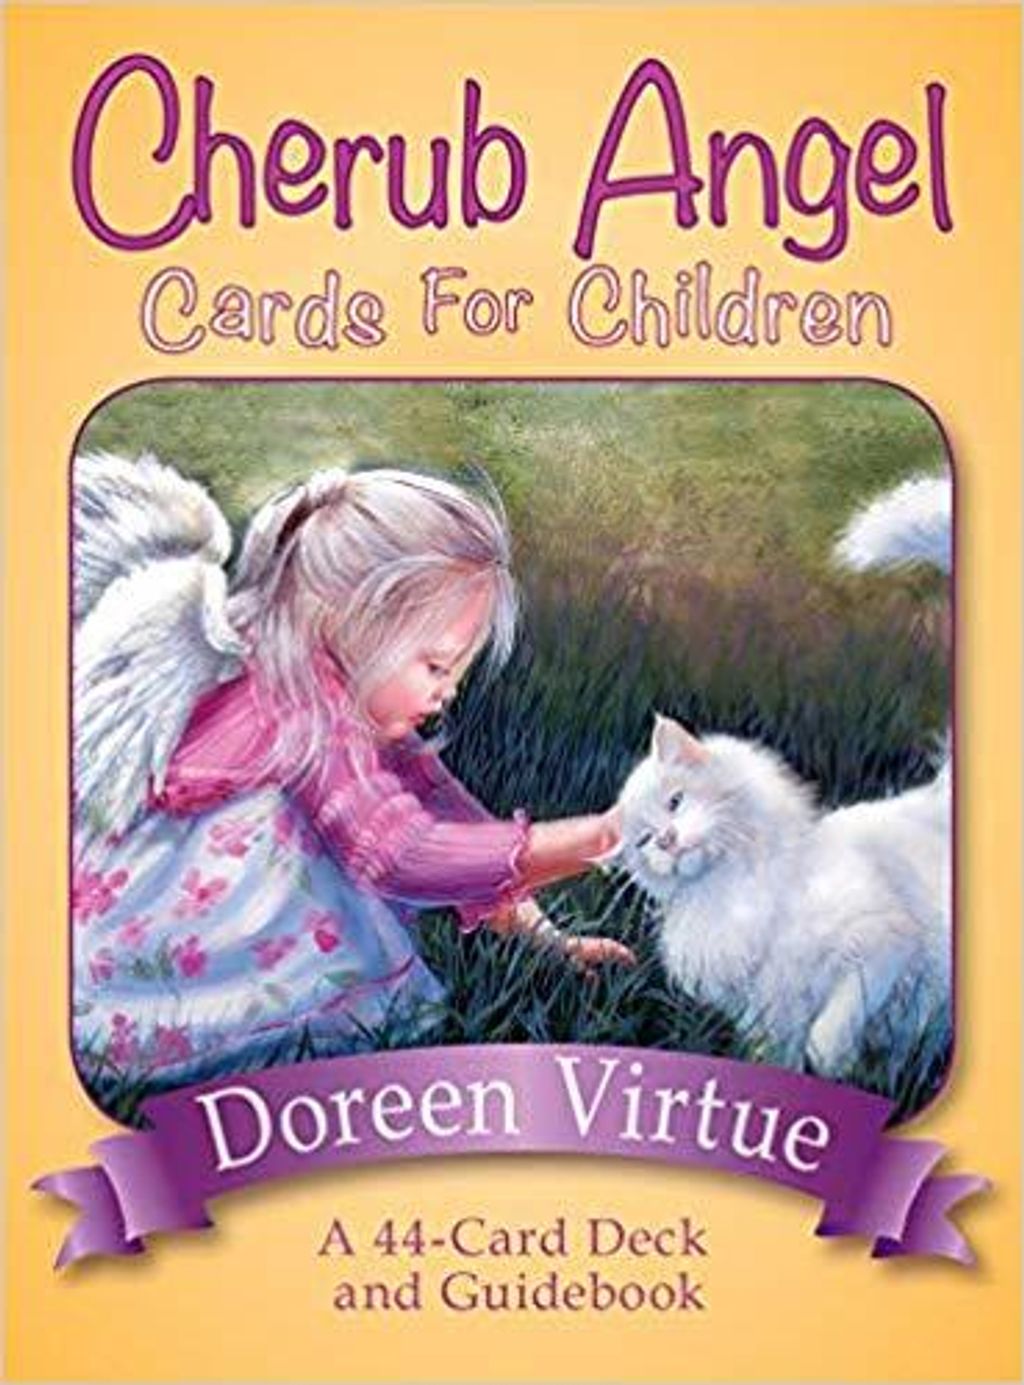 基路柏兒童天使卡 44 張卡：Cherub Angel Cards for Children.jpg